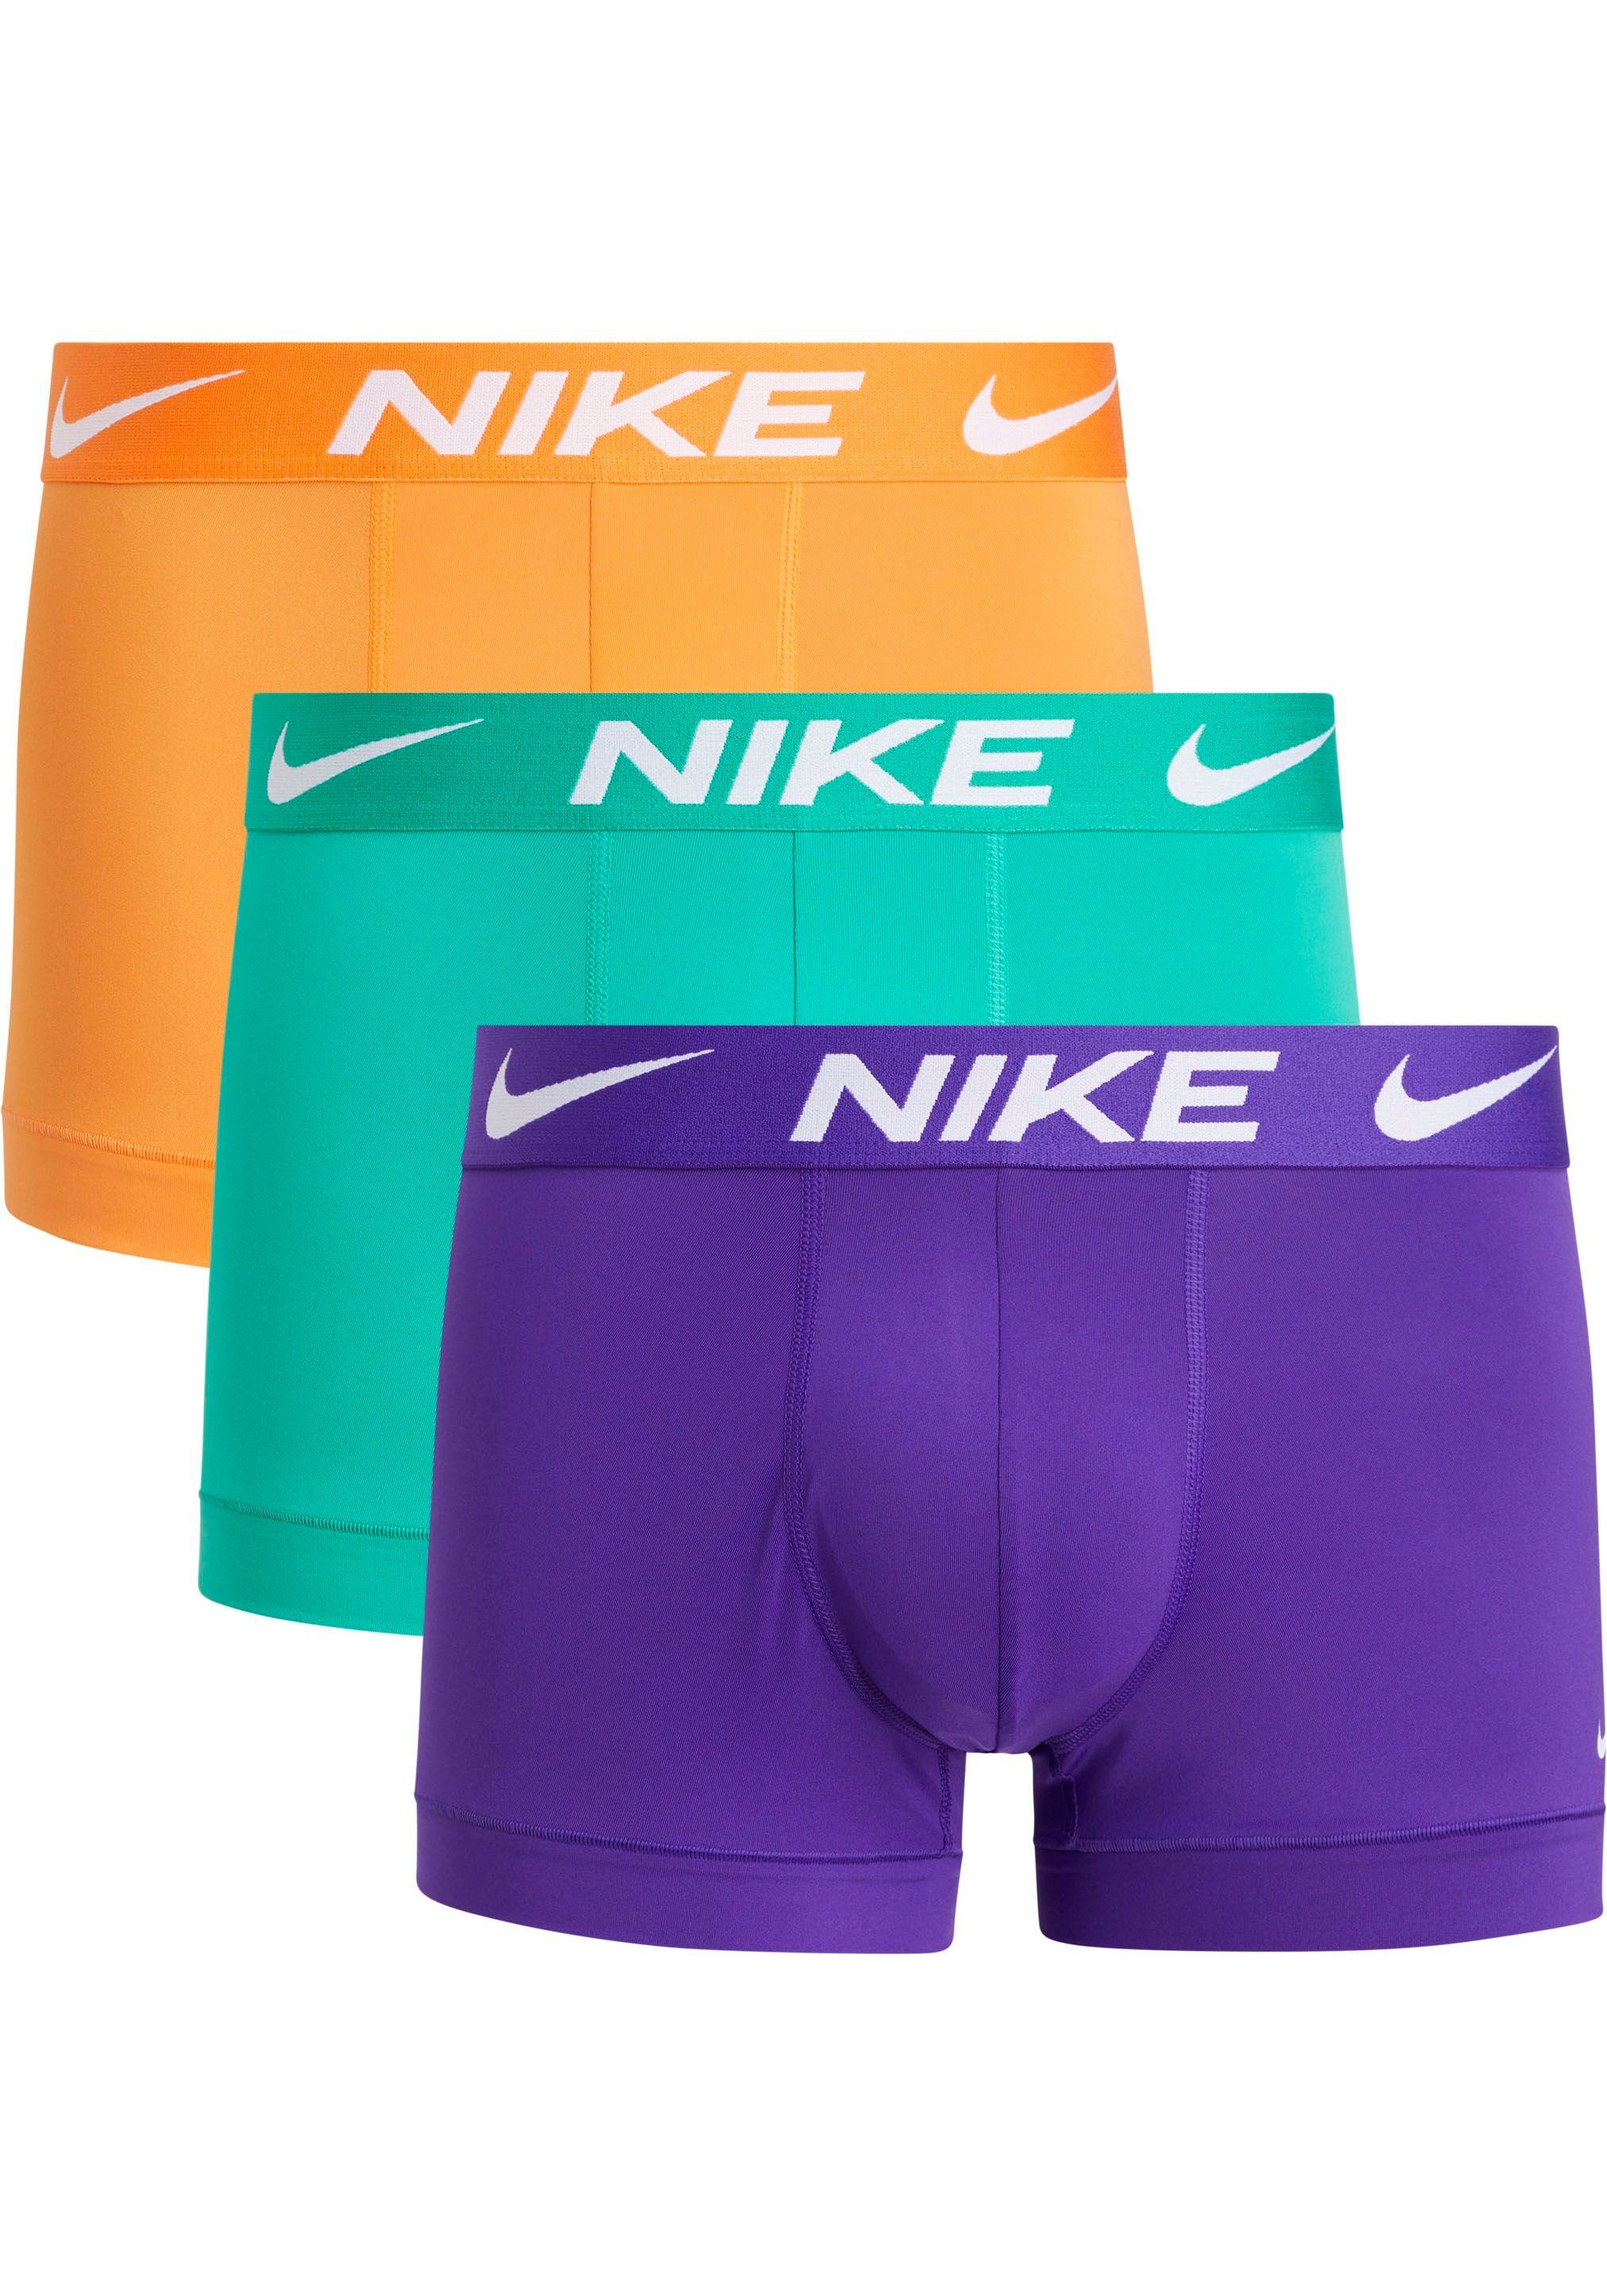 NIKE Underwear Trunk TRUNK 3PK (Packung, 3er-Pack) mit NIKE Logo-Elastikbund (3 Stück) FLD_PRPL/BRGHT_MNDRN/STDM_GRN